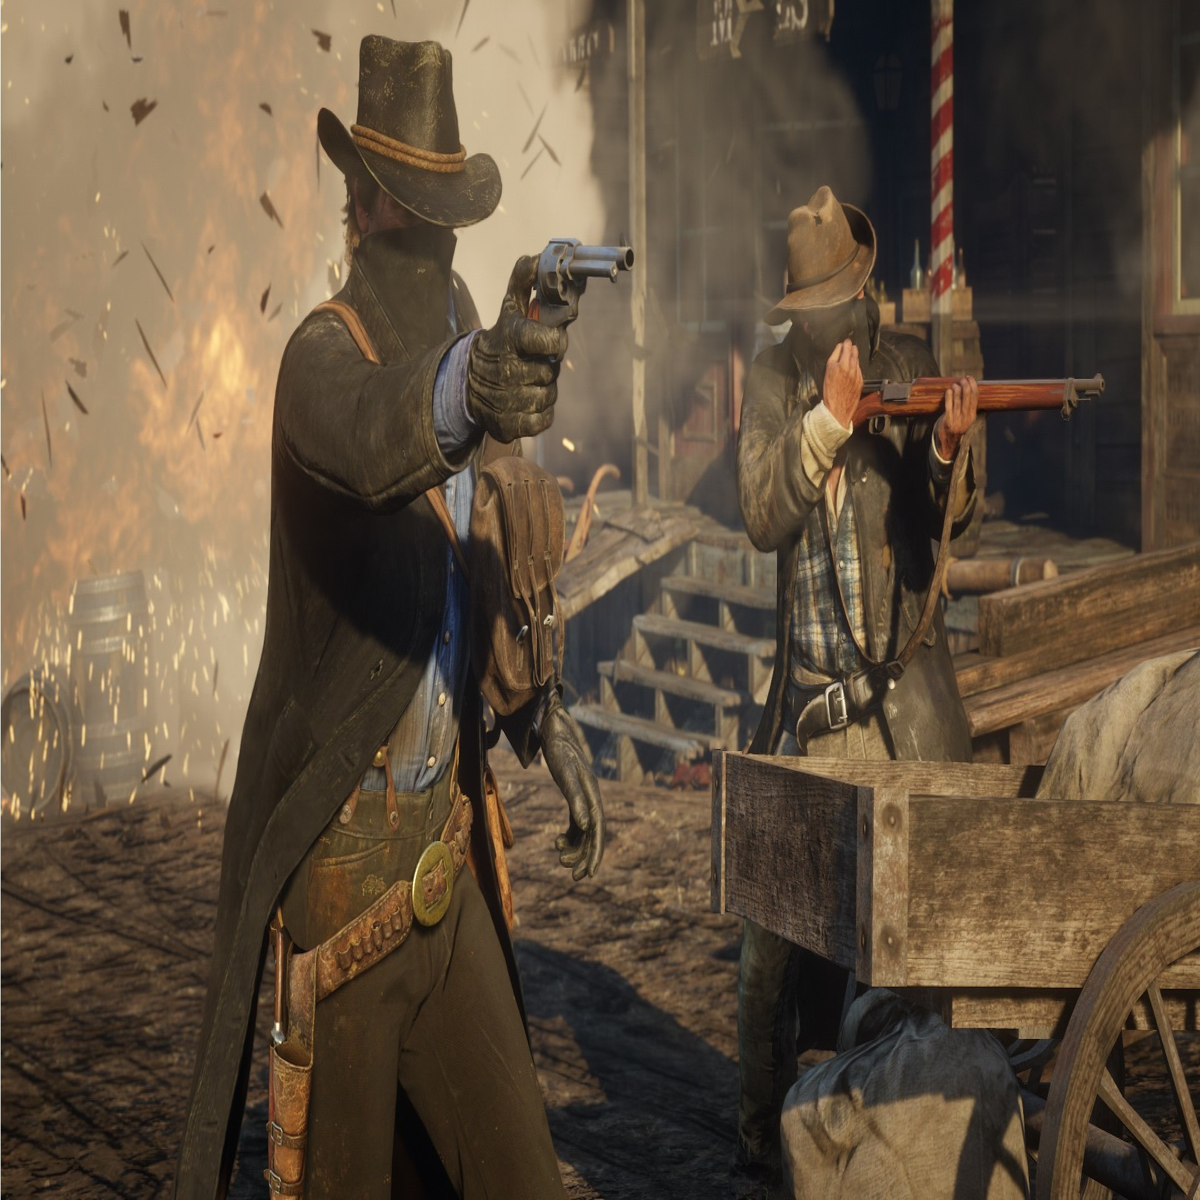 As Red Dead Redemption 2 nears release, Rockstar Games is under